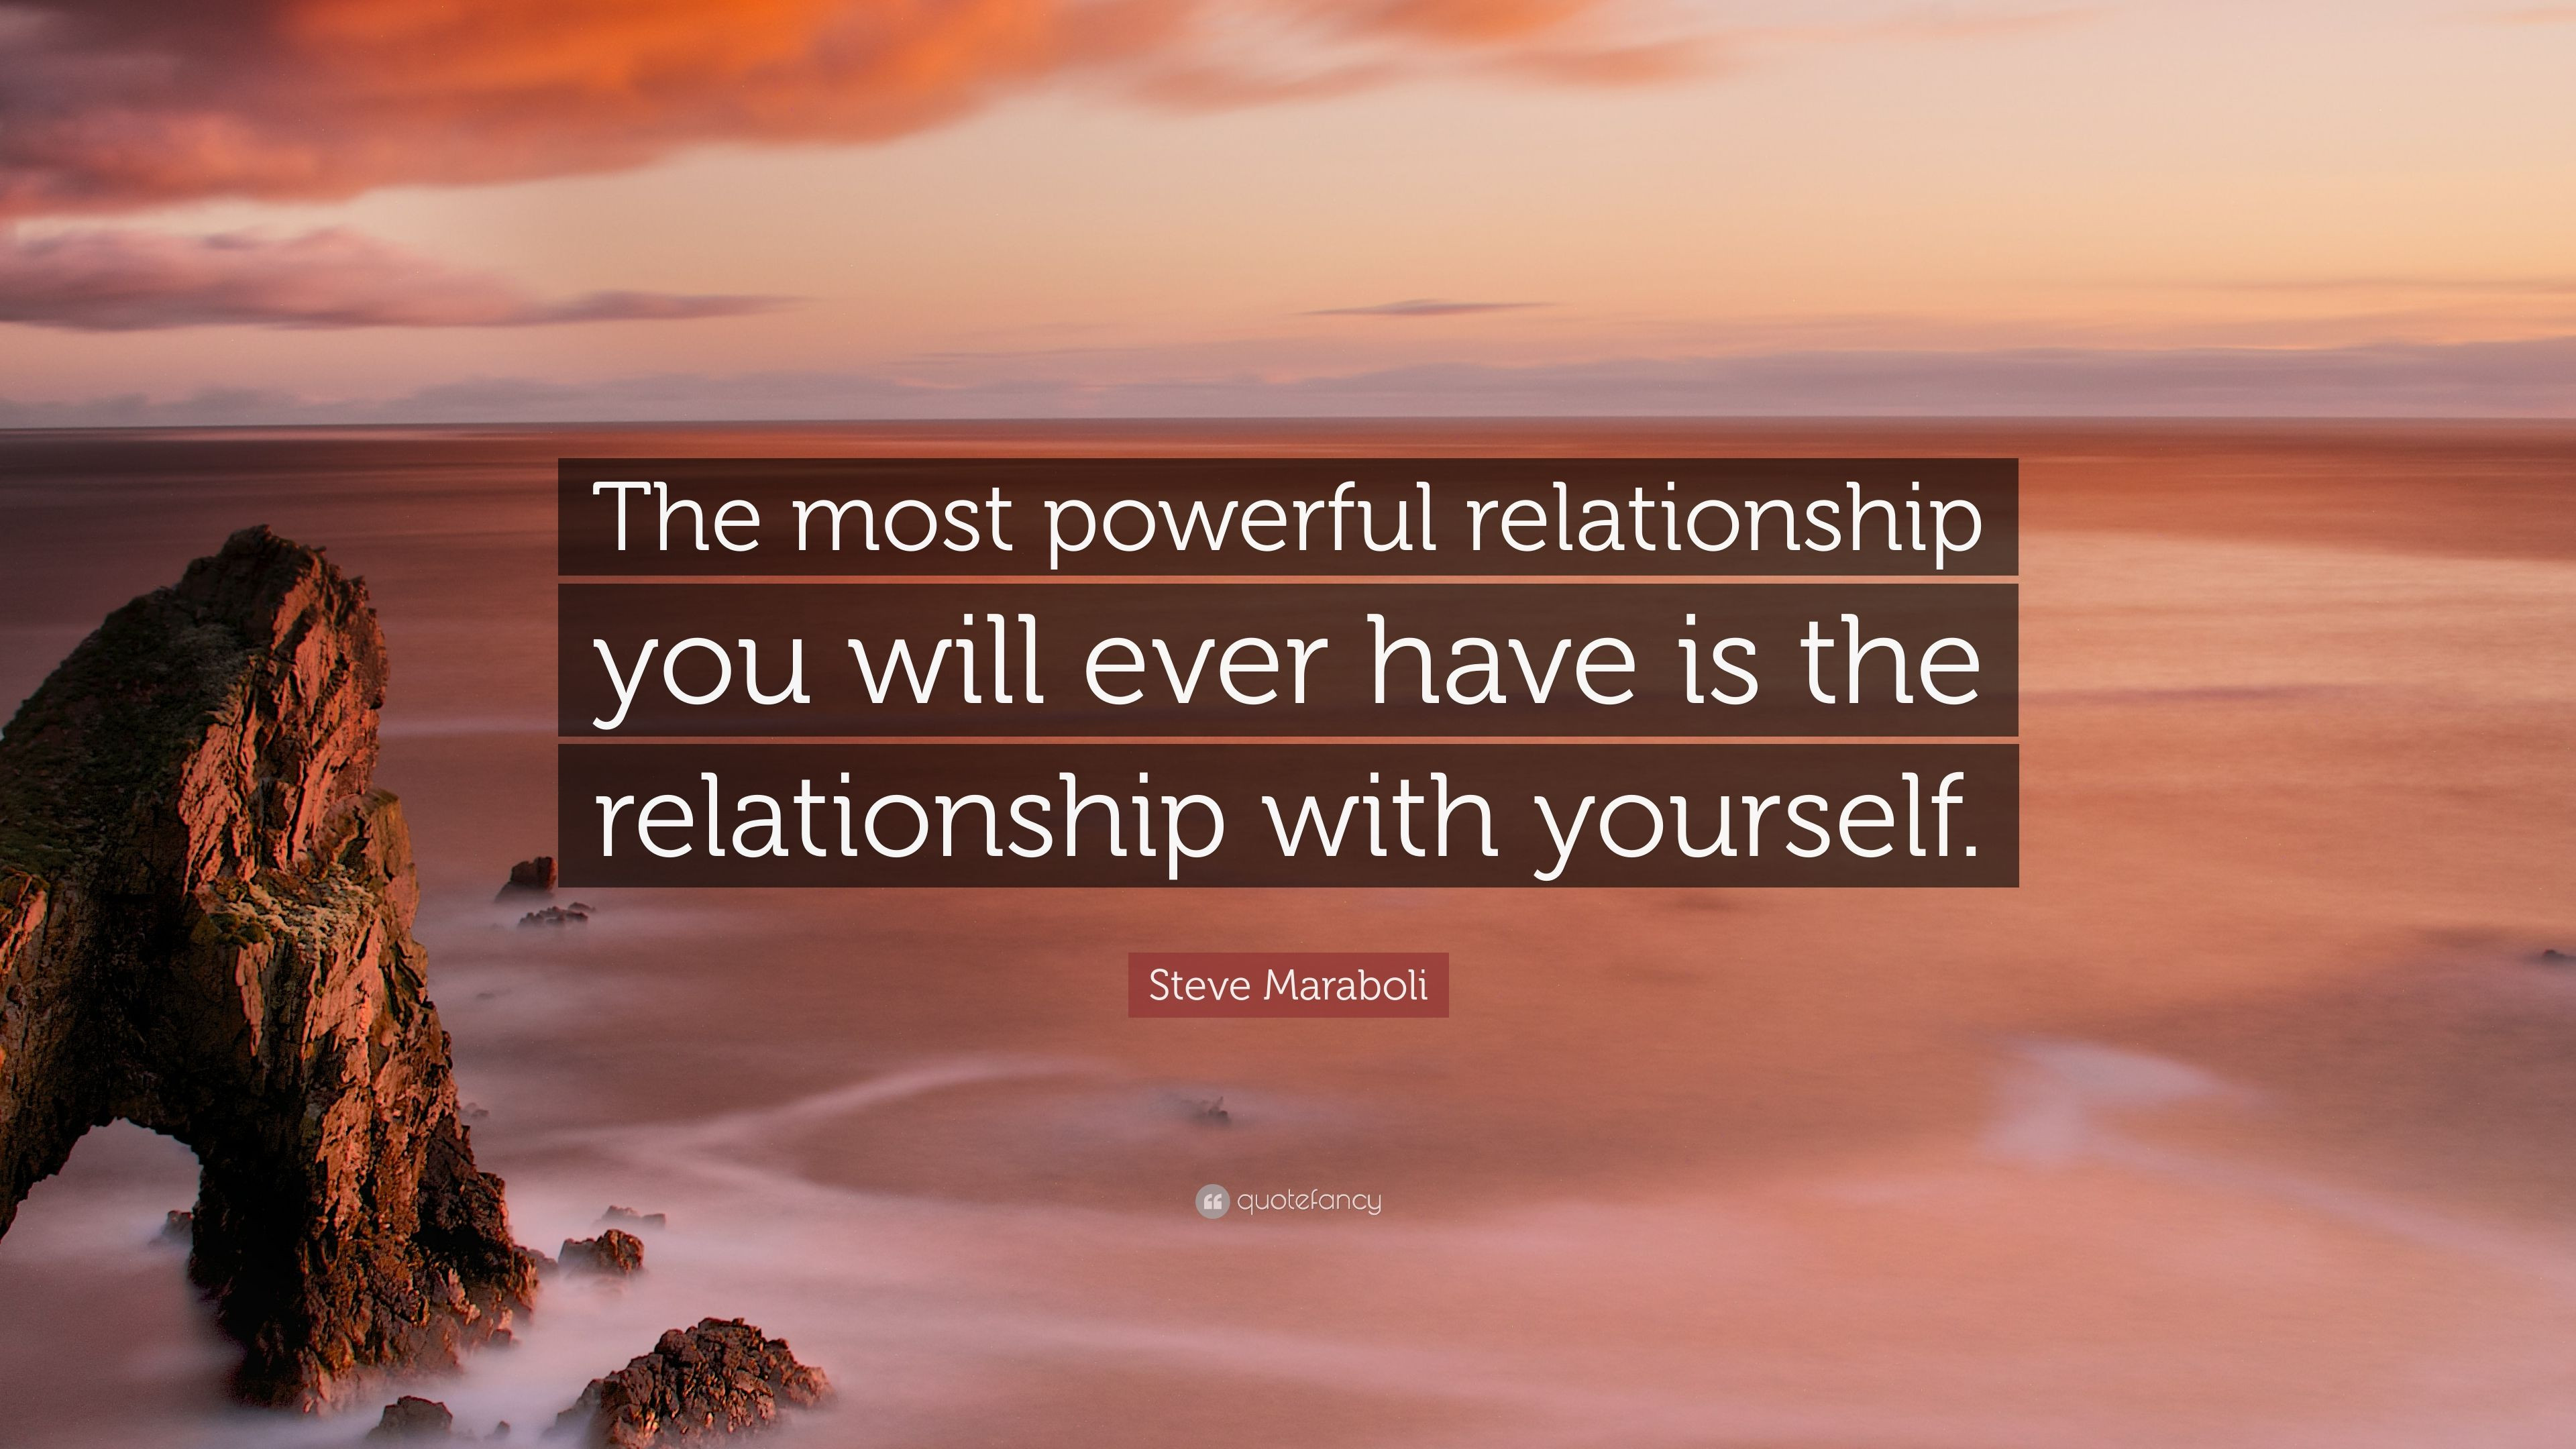 Powerful Relationship Quotes
 Steve Maraboli Quote “The most powerful relationship you